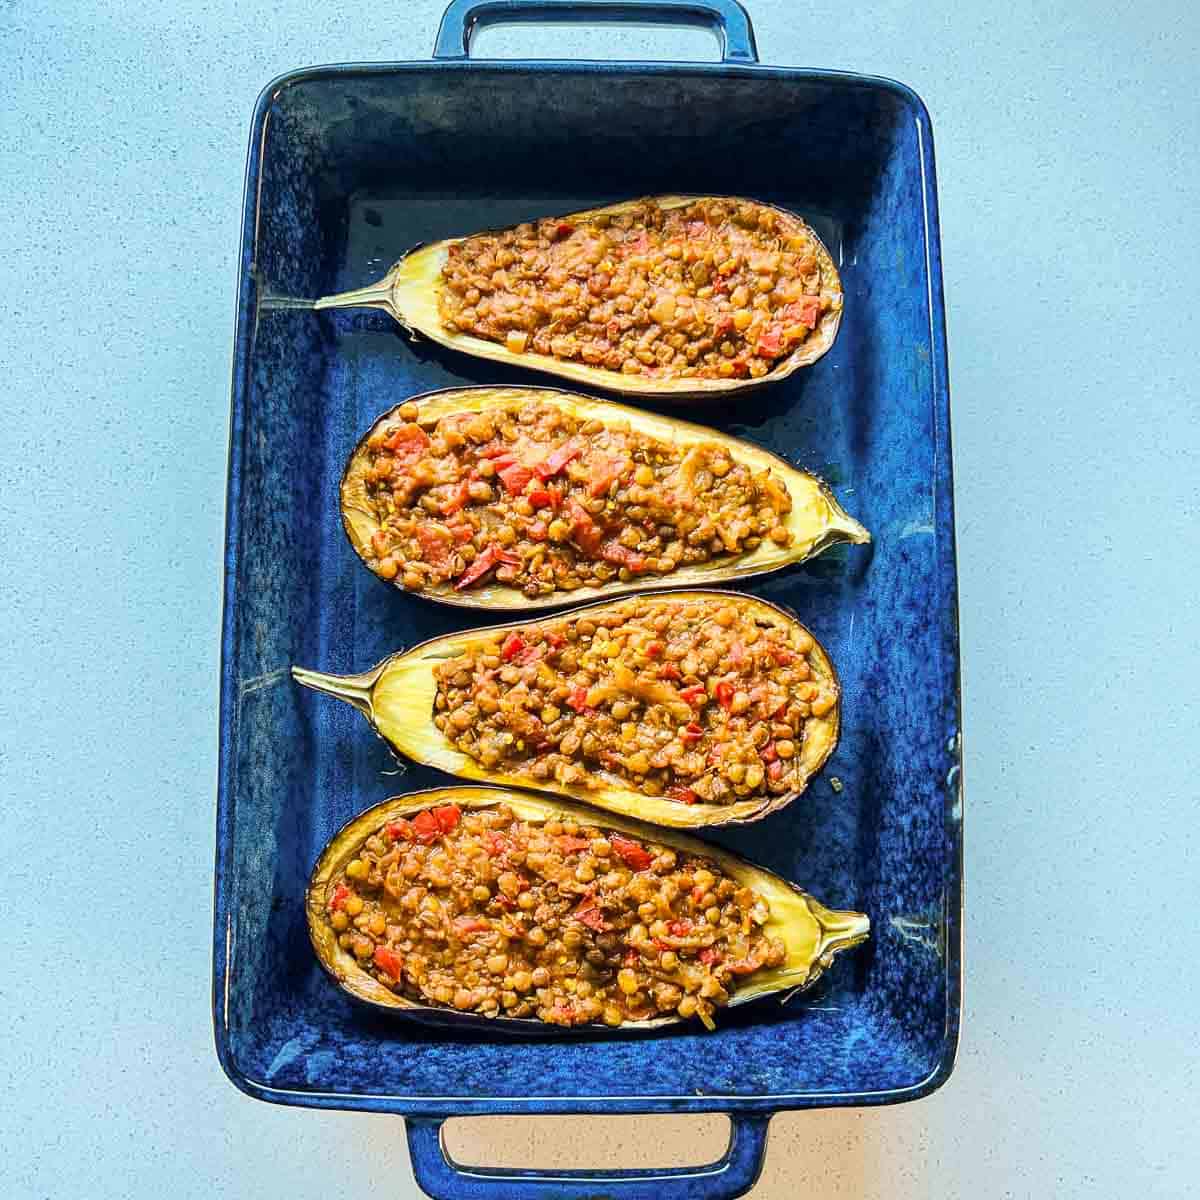 Prepared lentils filled into baked eggplants.